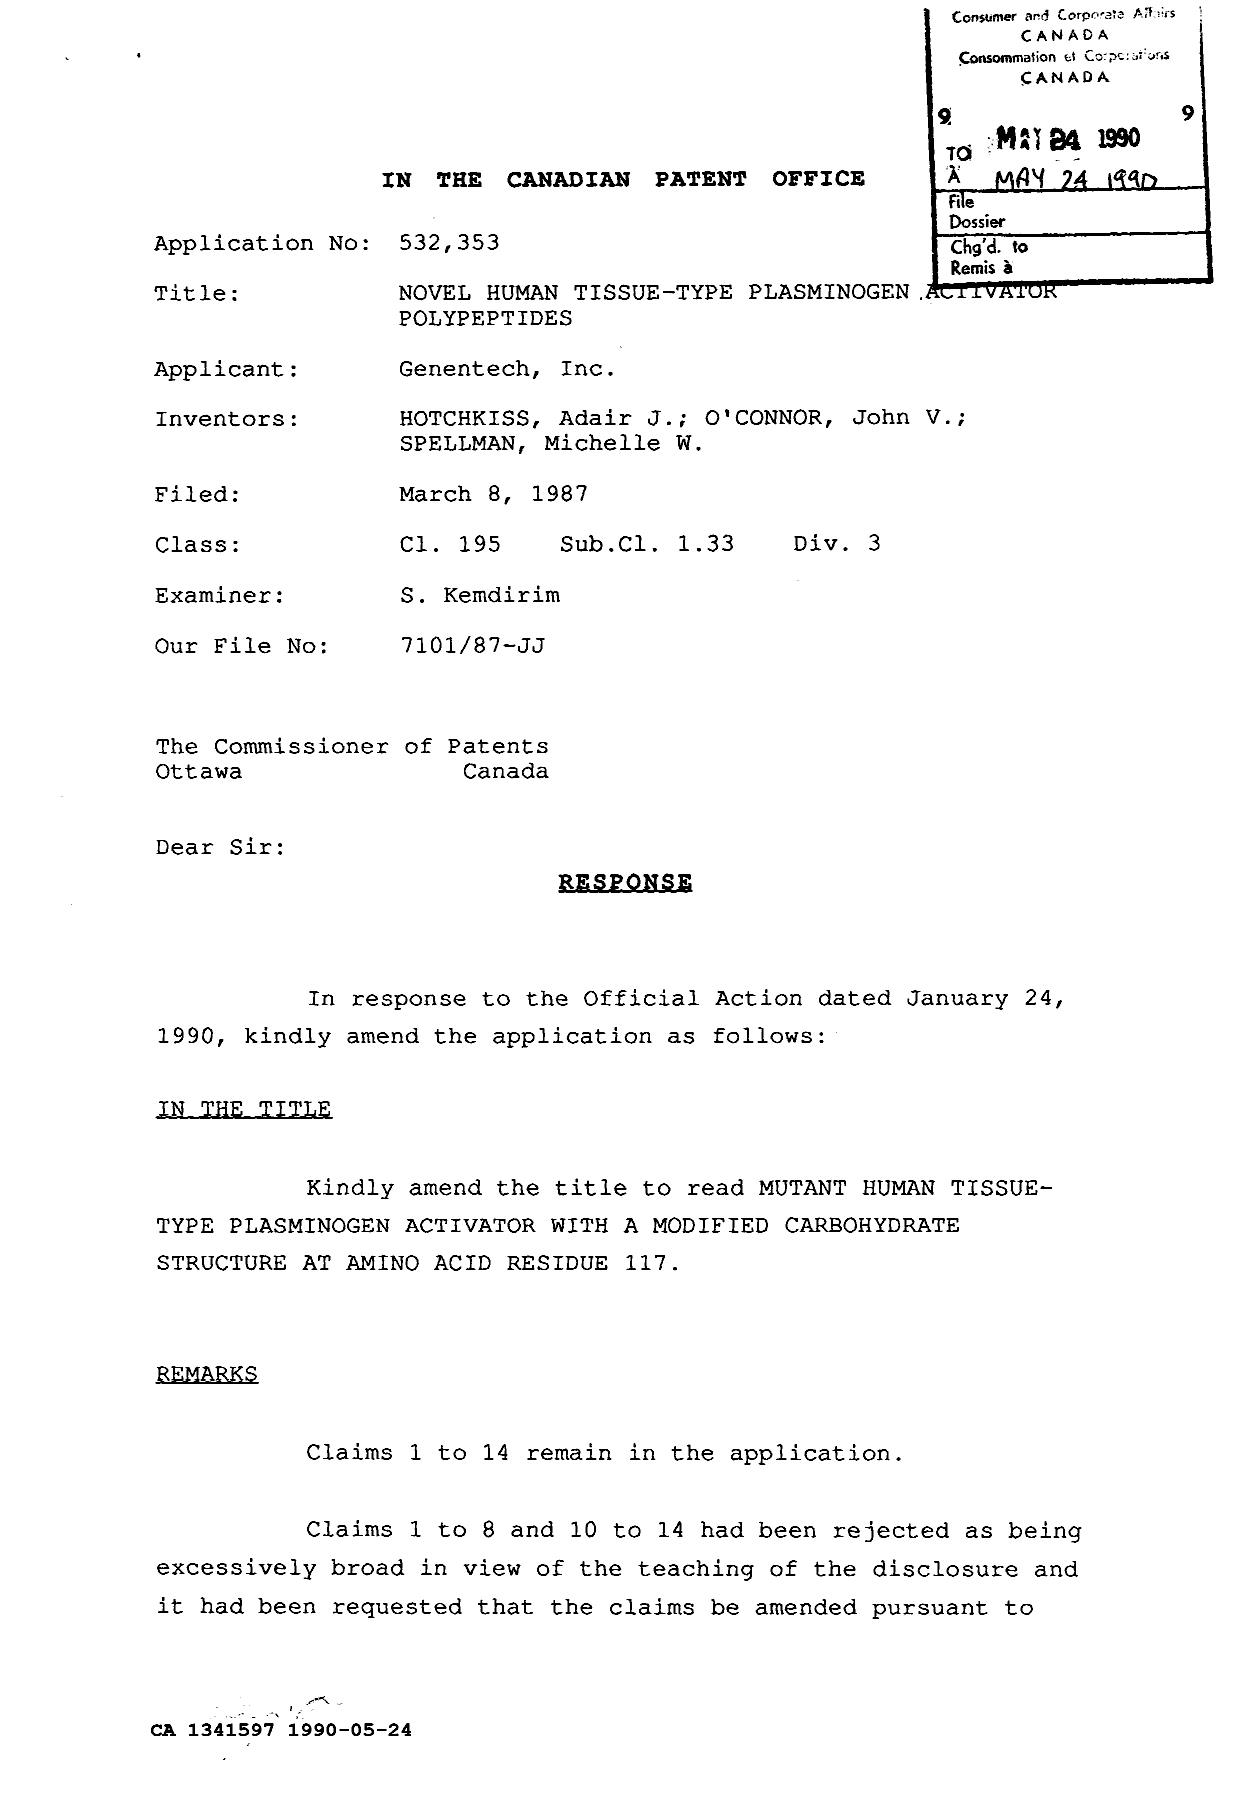 Canadian Patent Document 1341597. Prosecution Correspondence 19900524. Image 1 of 11